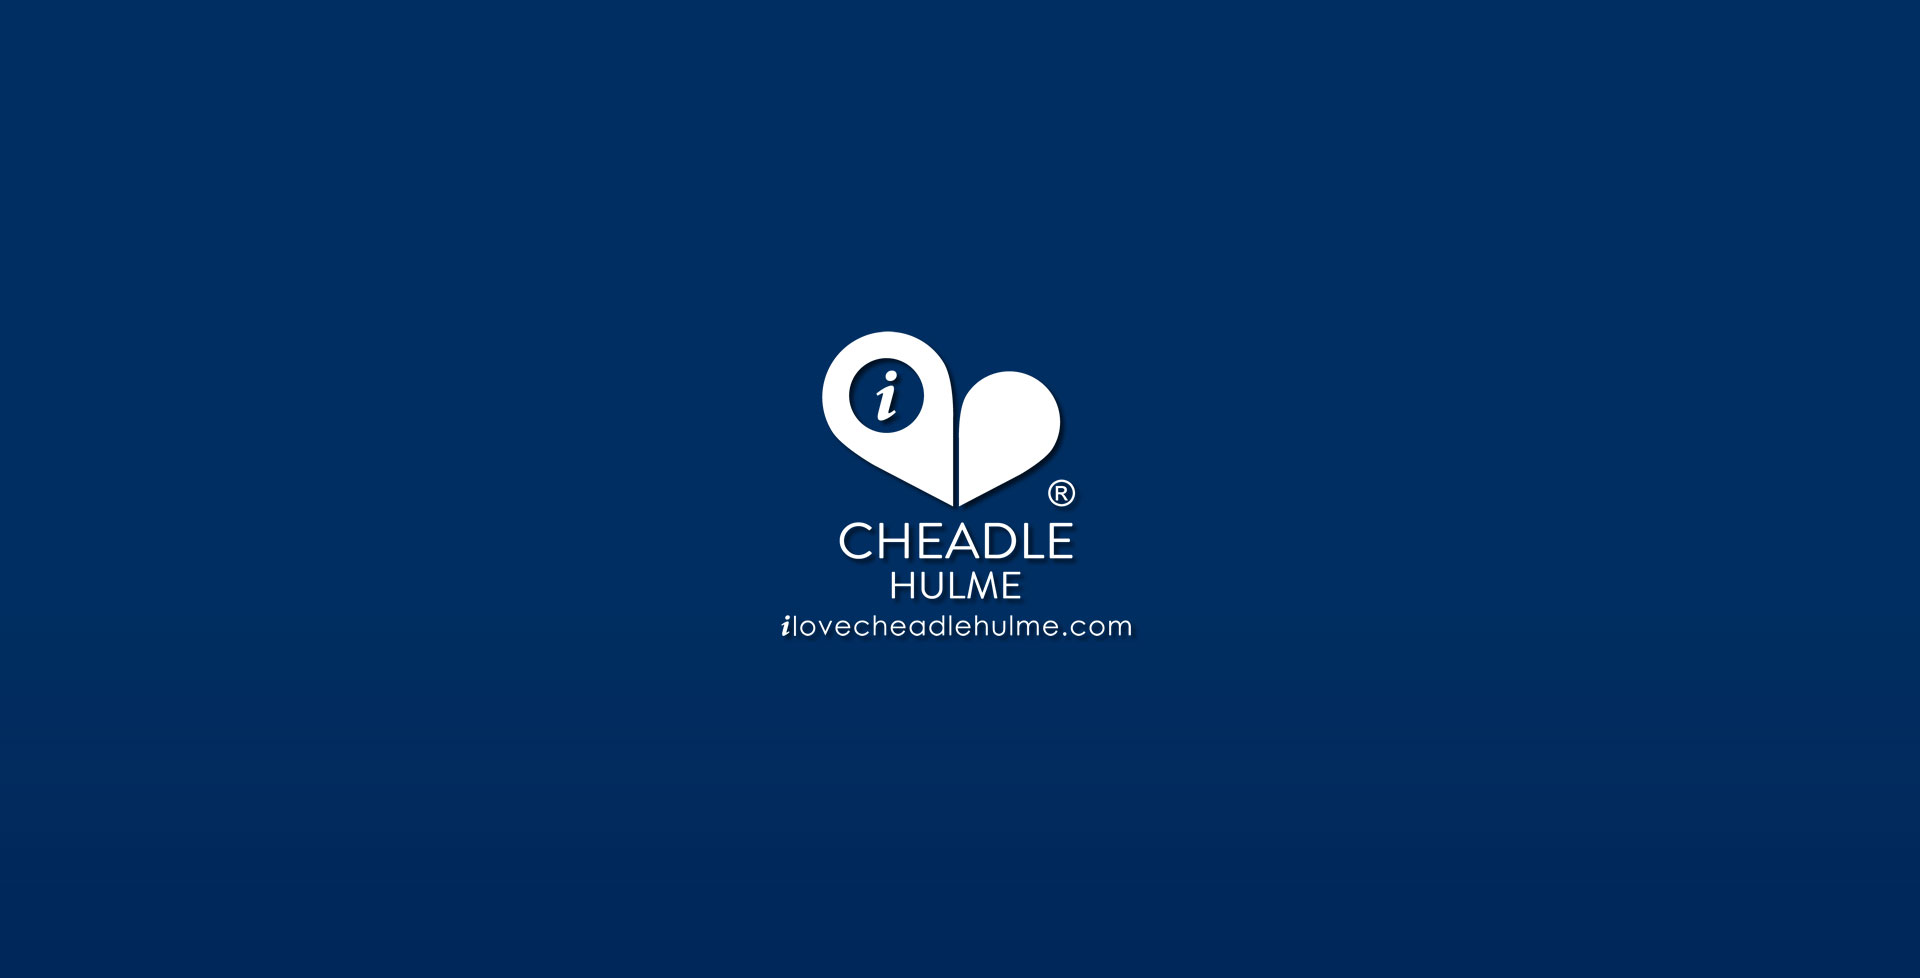 I Love Cheadle Hulme 2021!